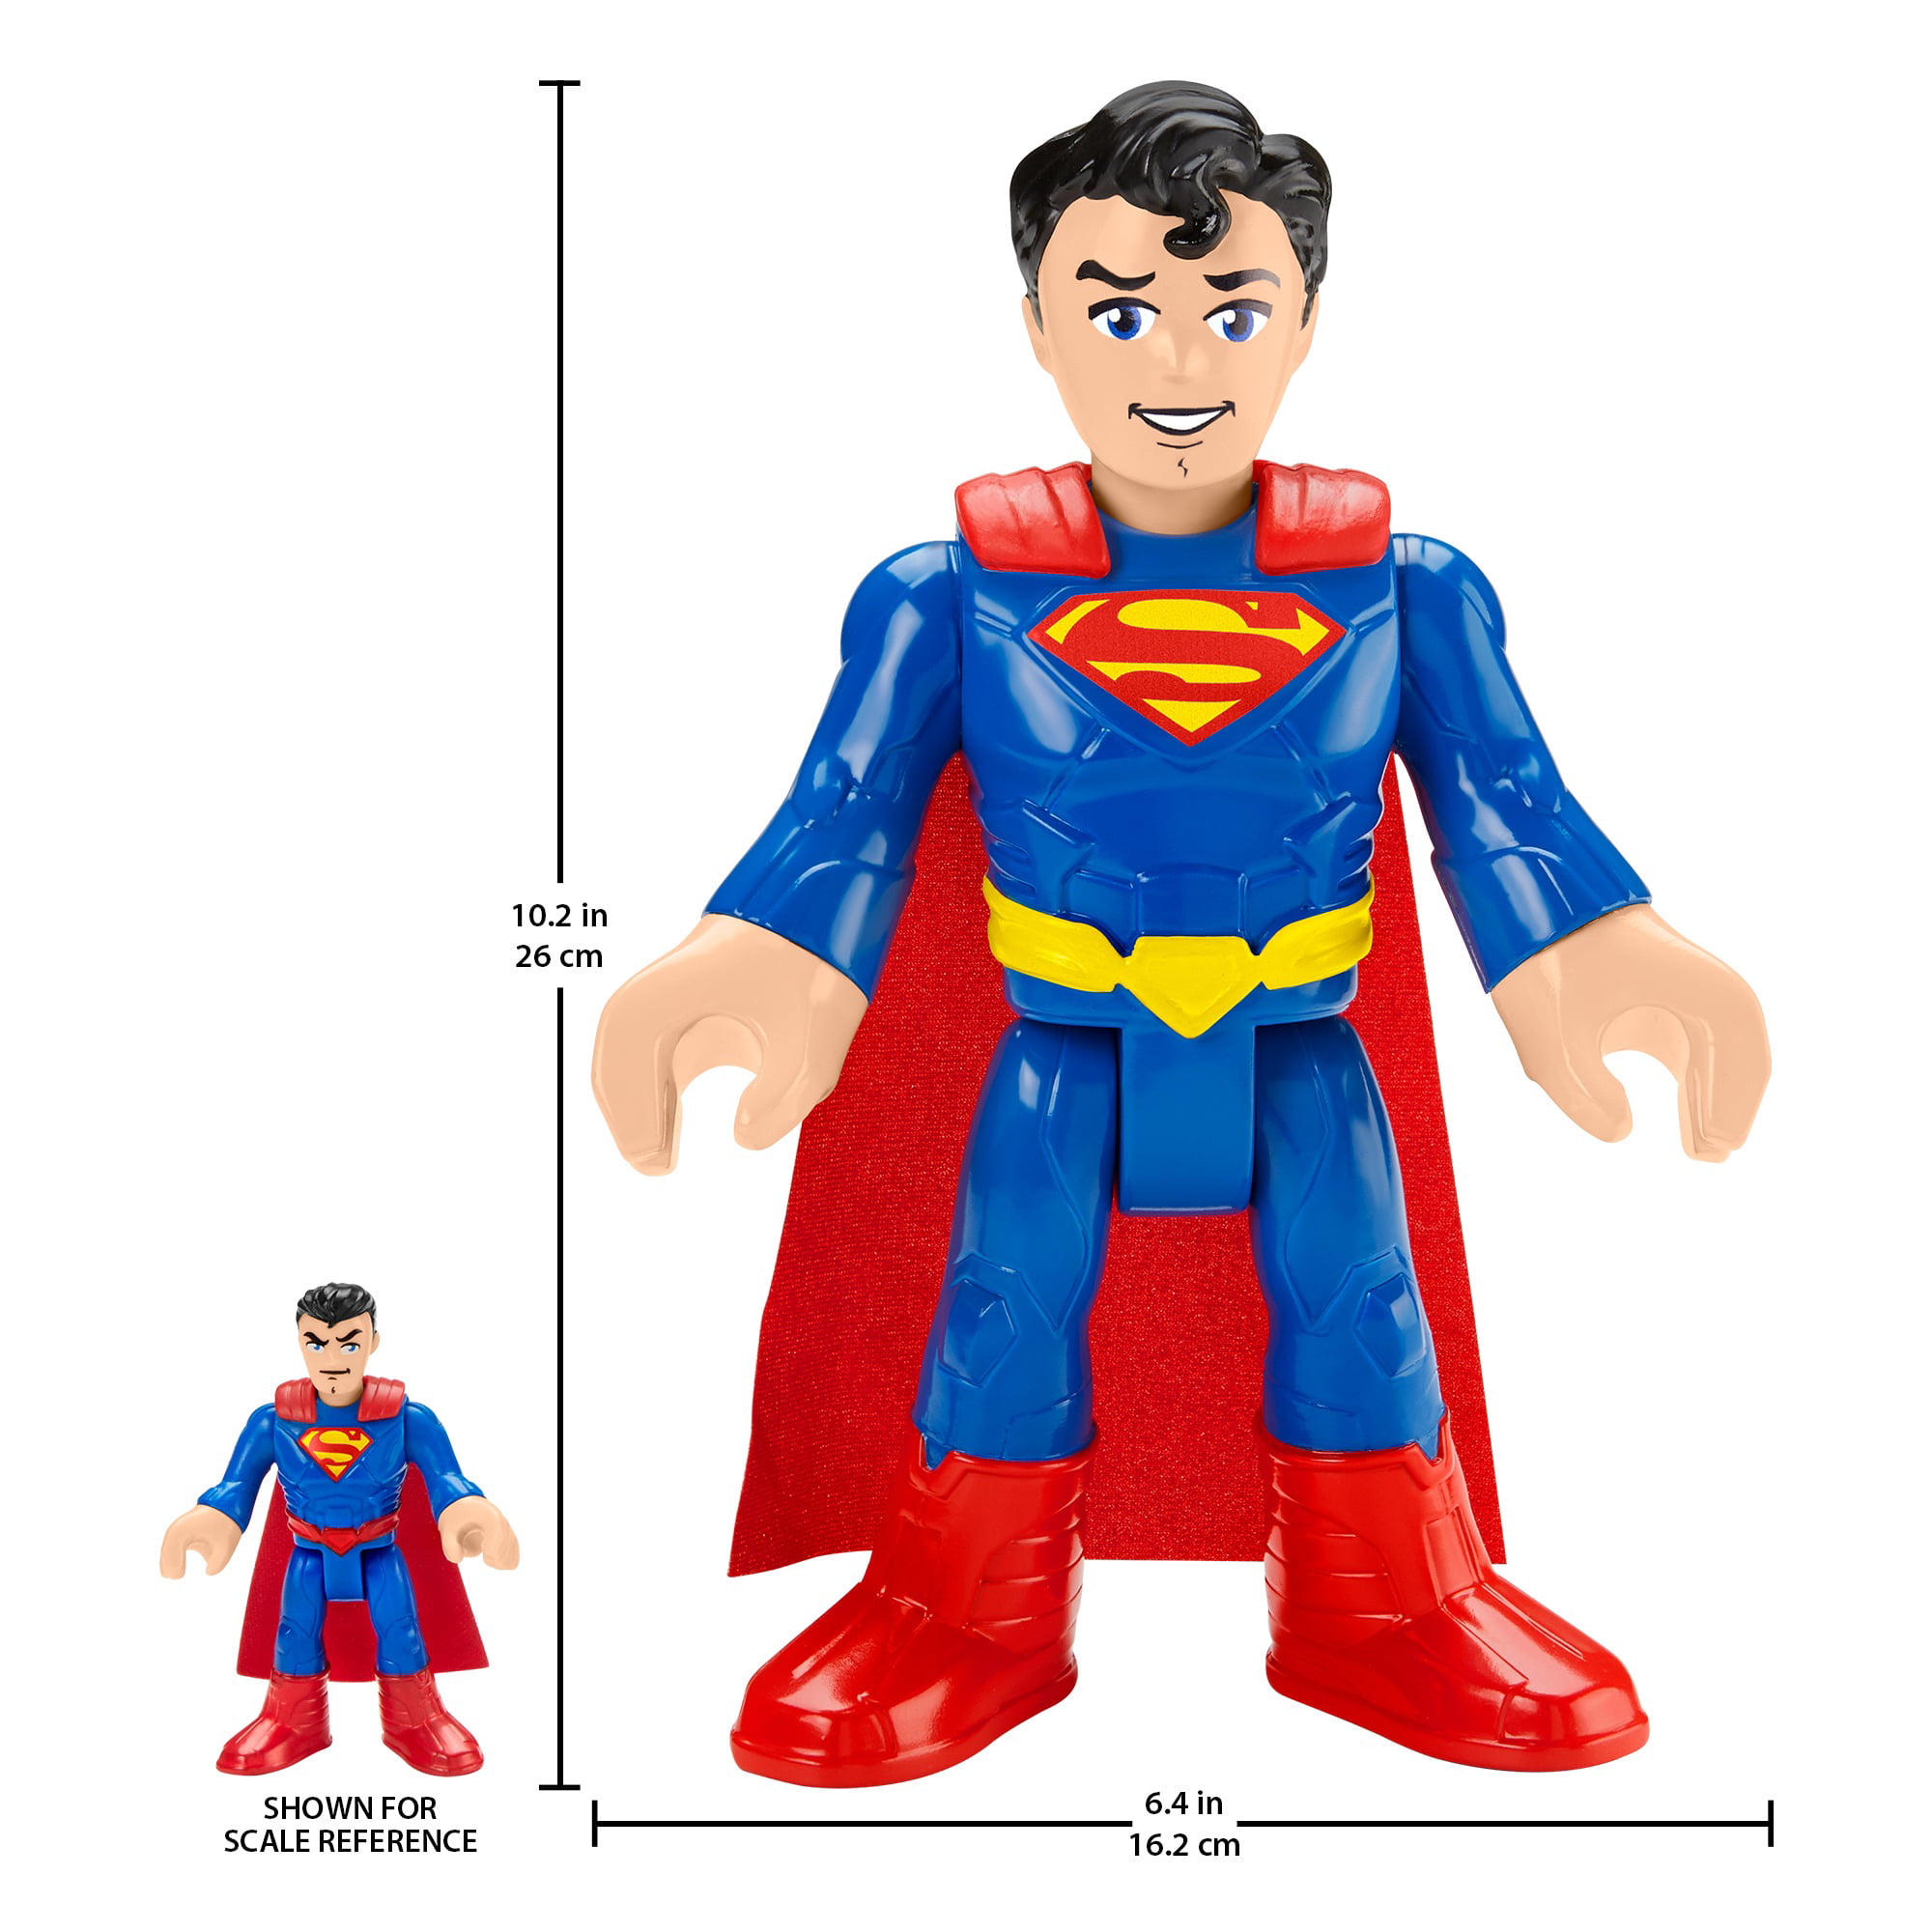 Imaginext DC Super Friends General Zod Mattel Superman Figure Fisher Price Toys 